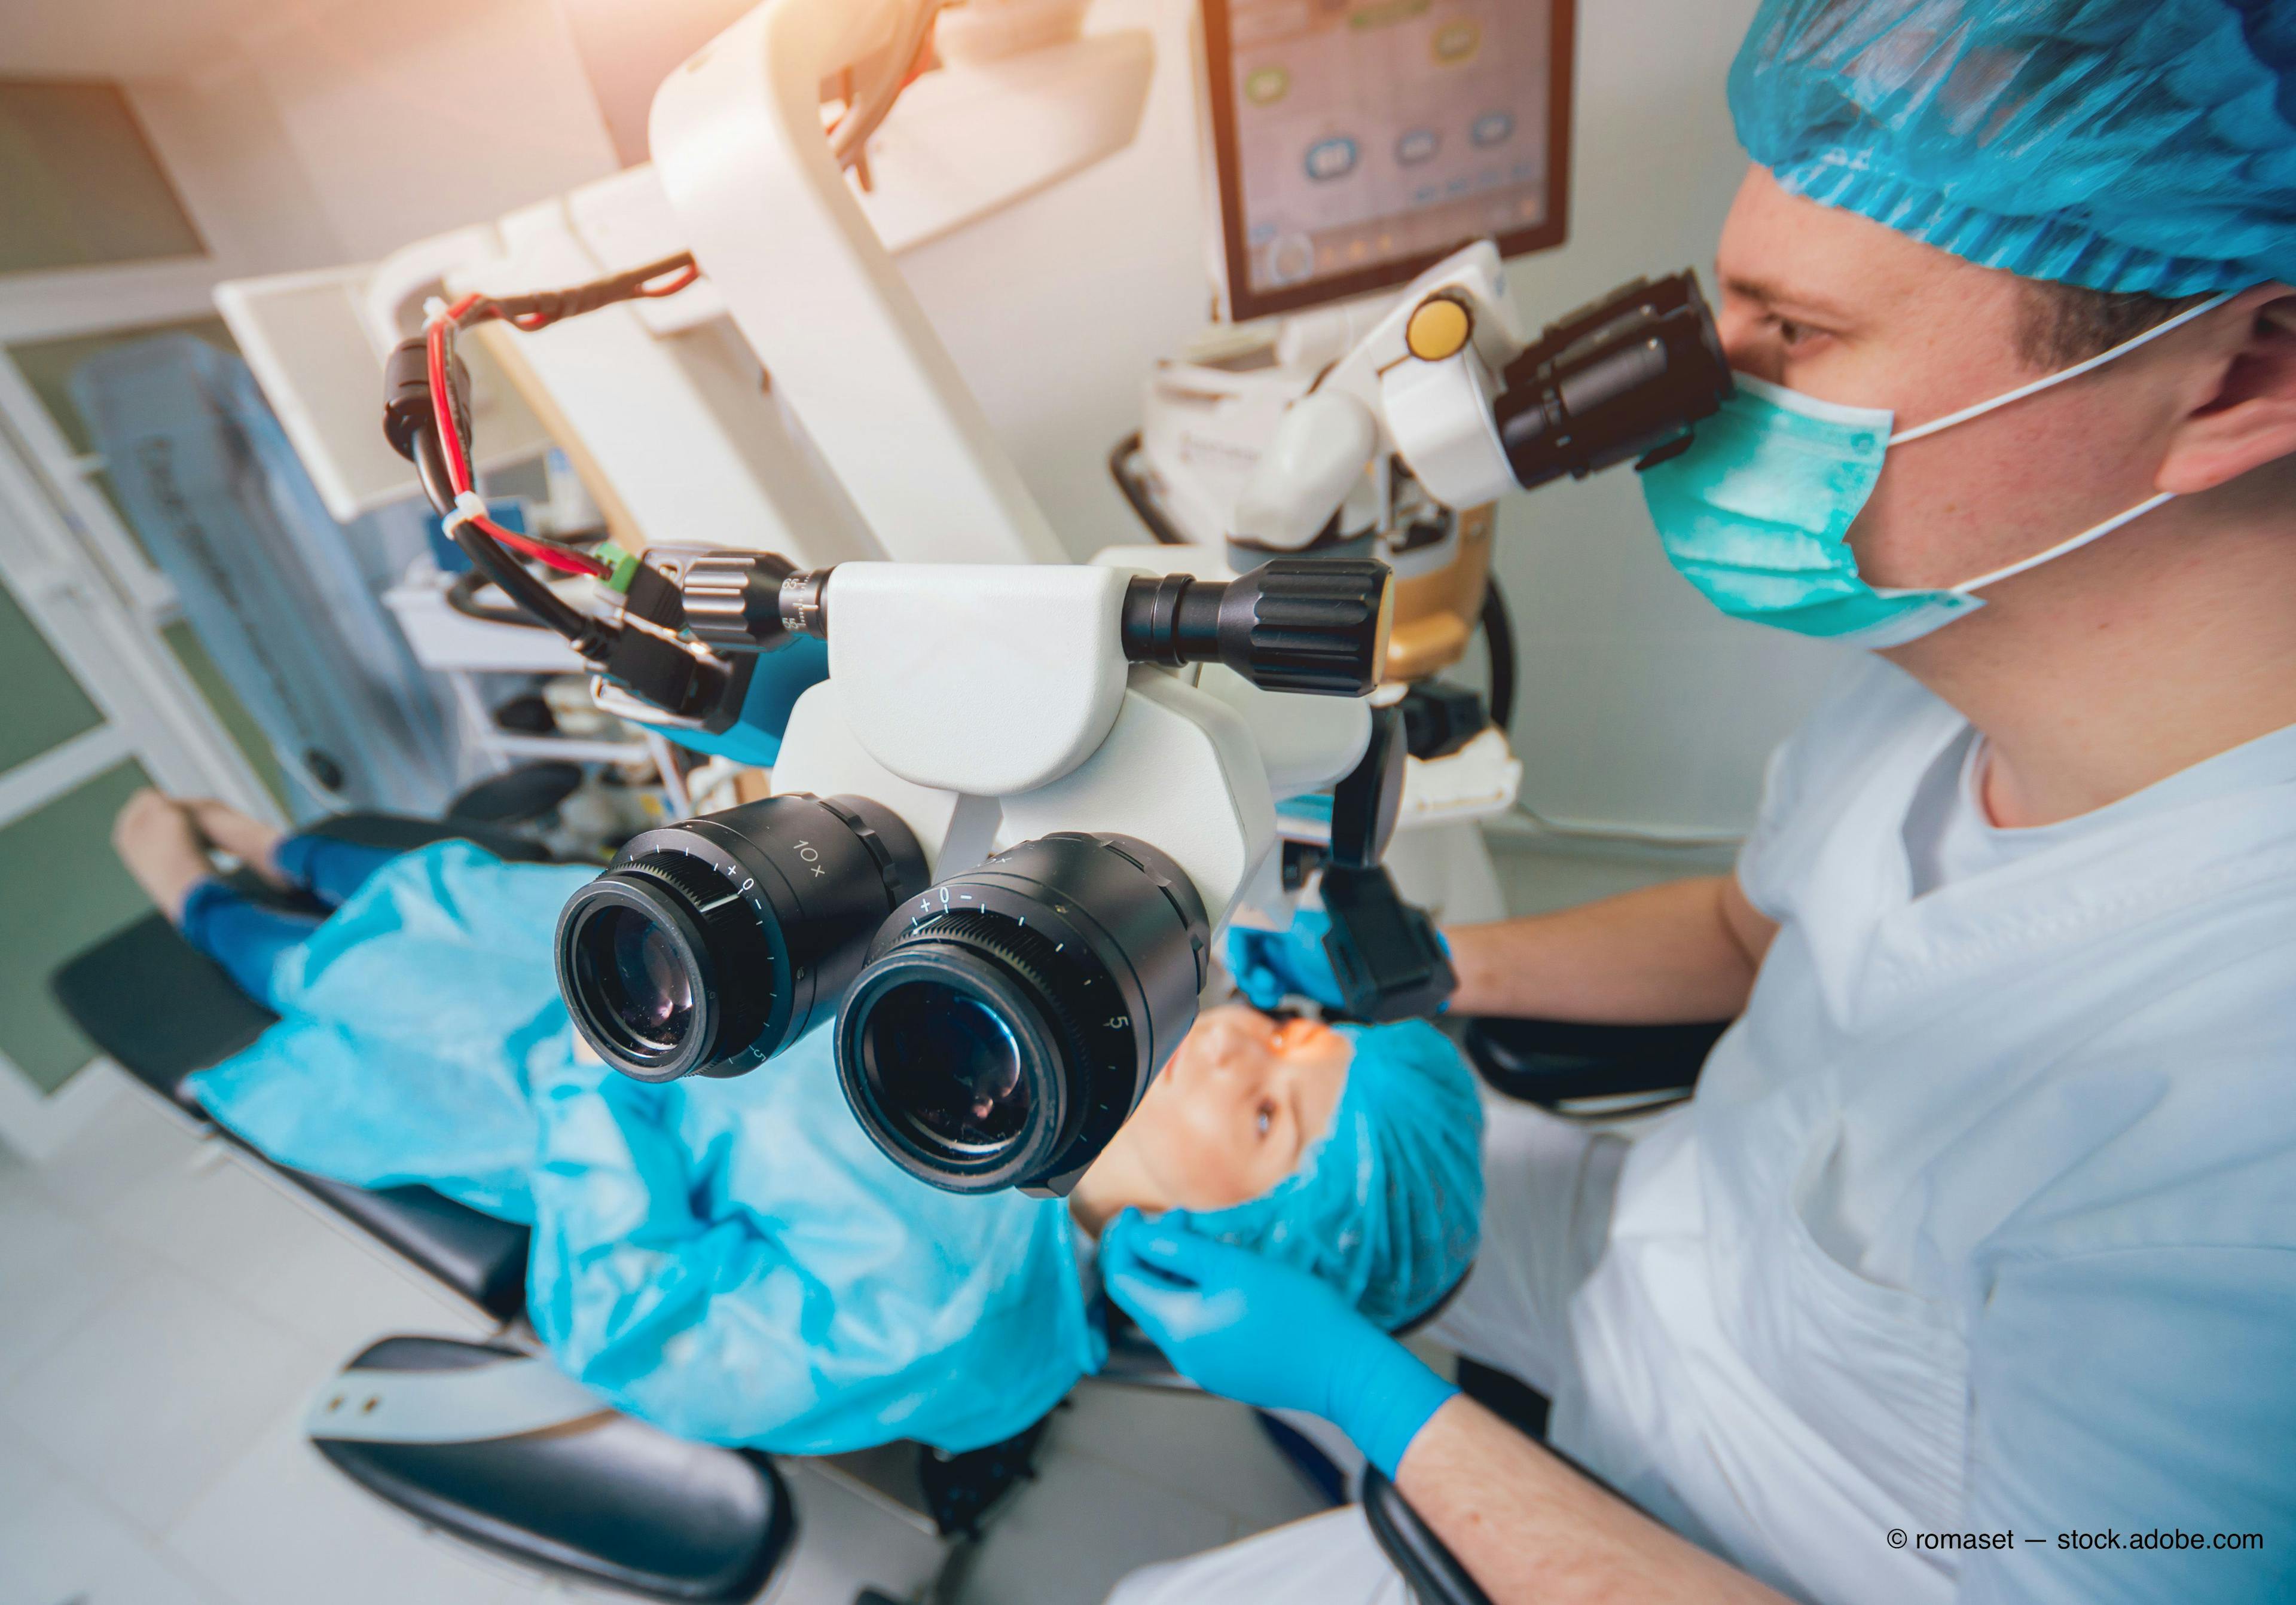 SS-OCT detecting macular pathology prior to cataract surgery